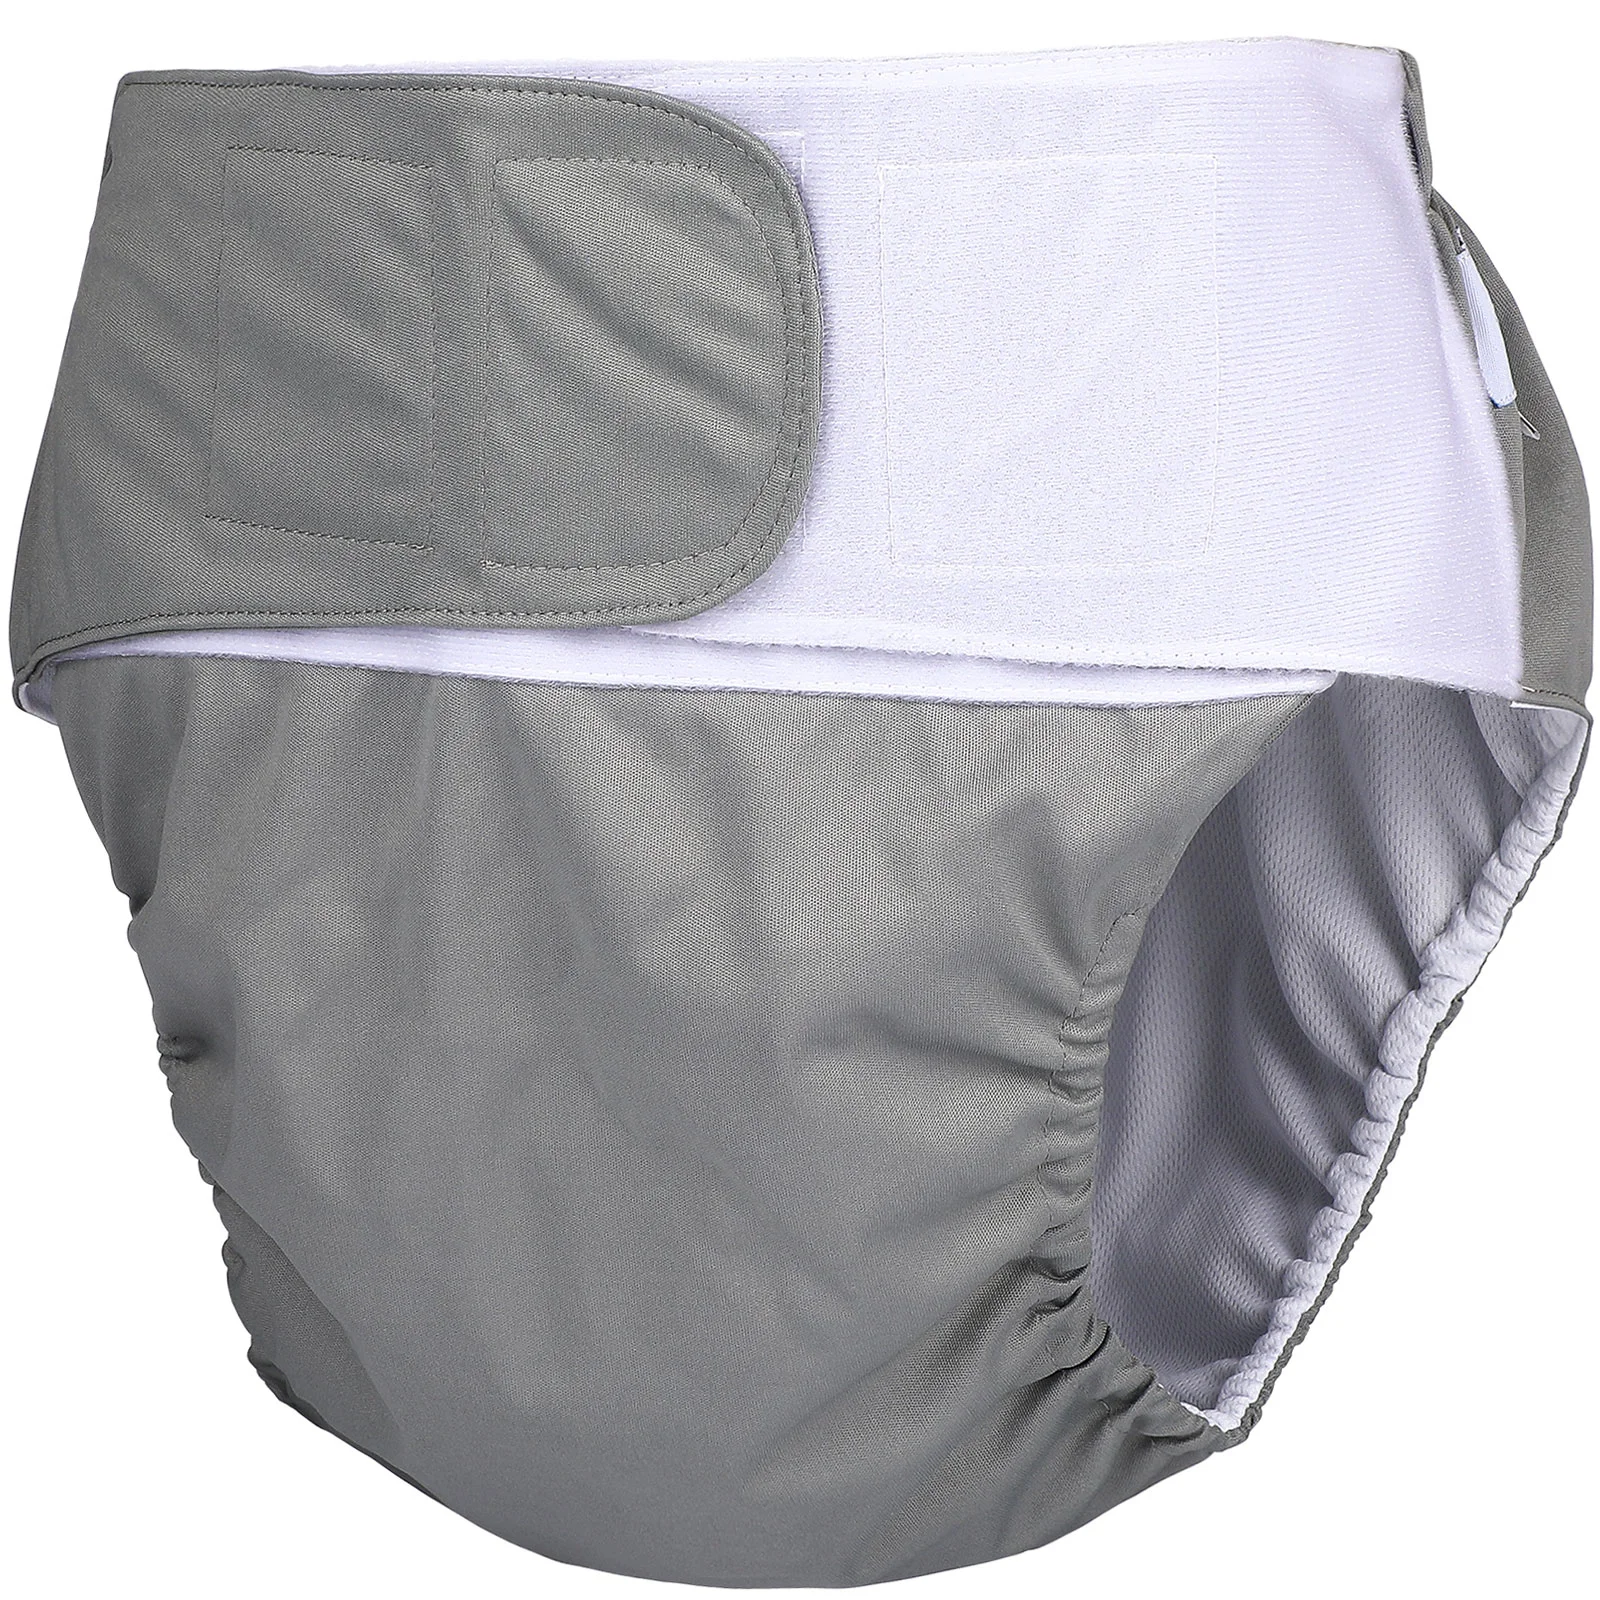 

Prevail Adult Diapers for Men Washable Oversized Swim Patient Reusable Pants Man Nappies Elderly